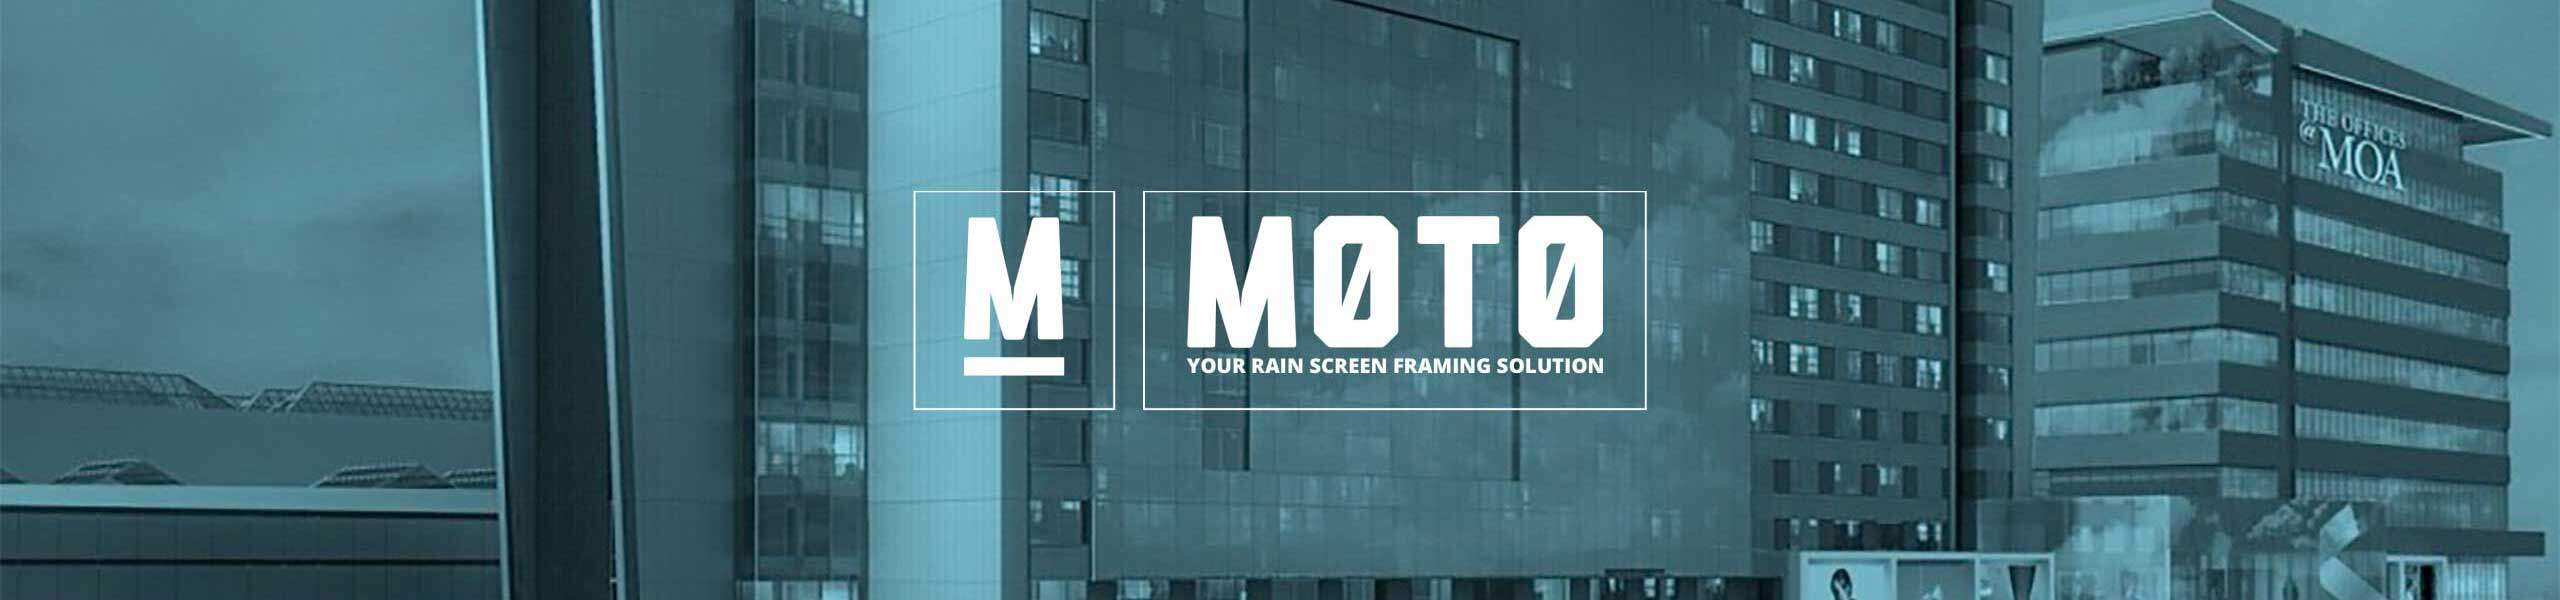 MOTO Aluminum Rainscreen Framing Solutions